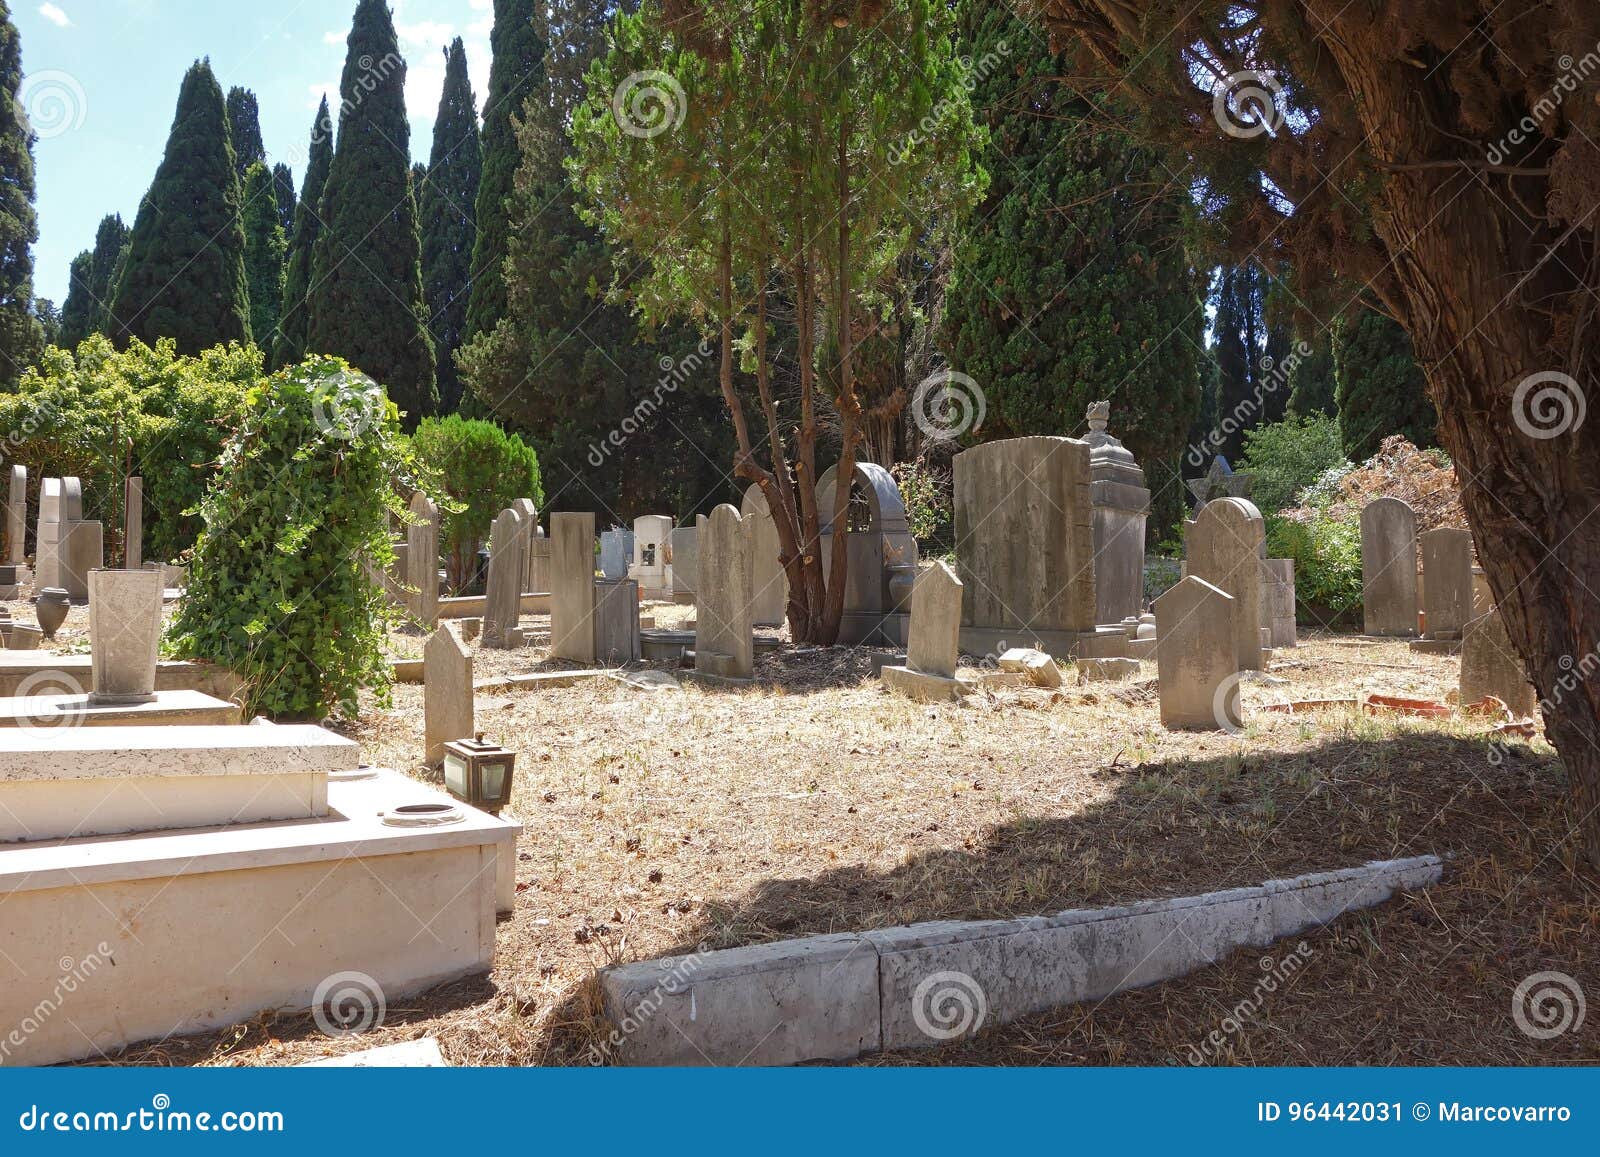 verano cemetery, jewish tombs